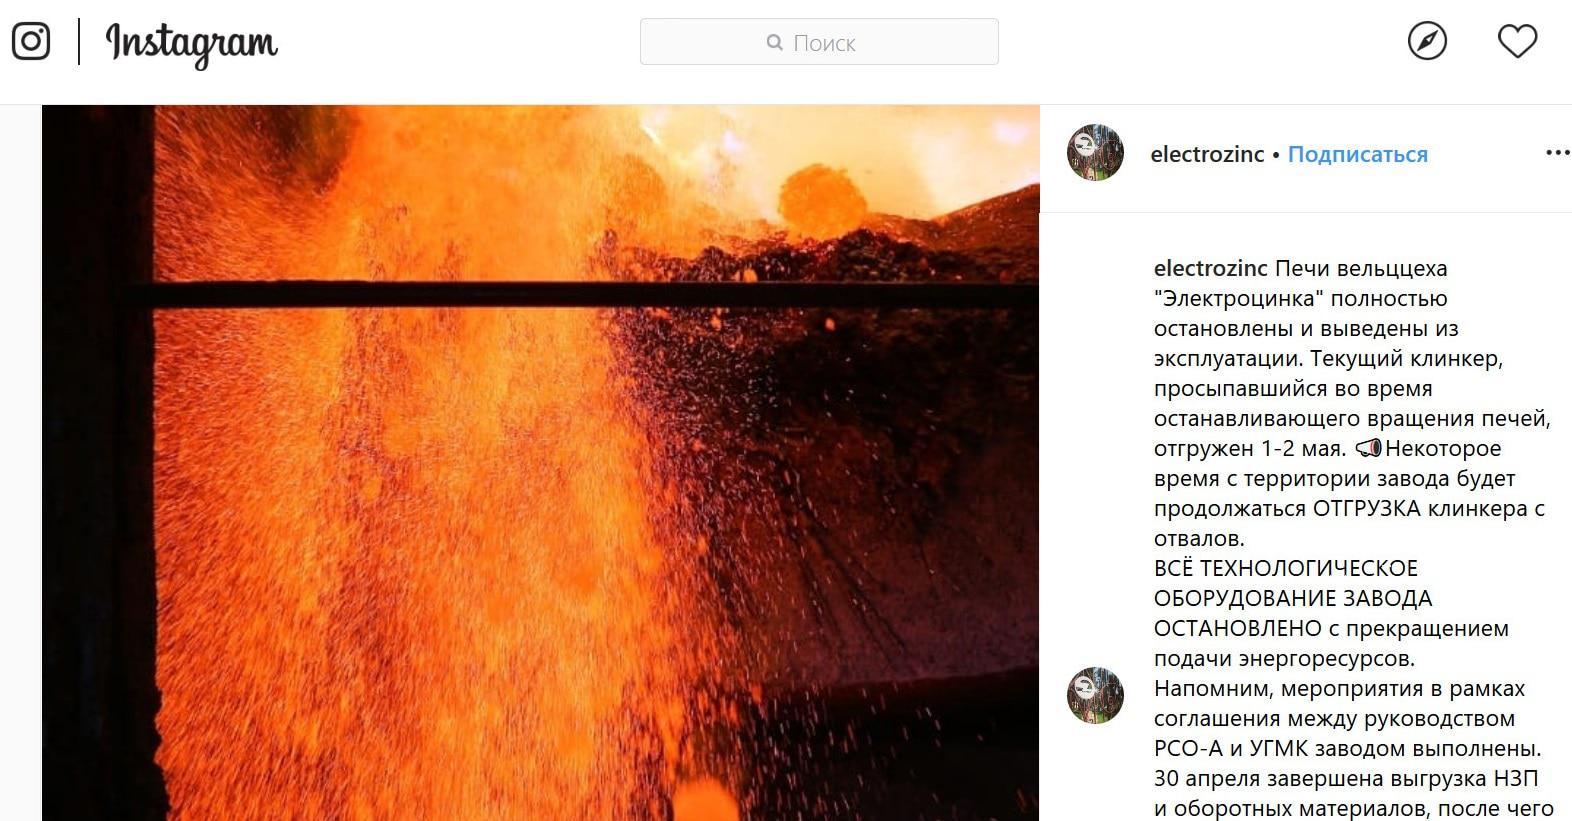 Скриншот сообщения на странице завода "Электроцинк" в Instagram https://www.instagram.com/p/Bw_6BErFjnD/